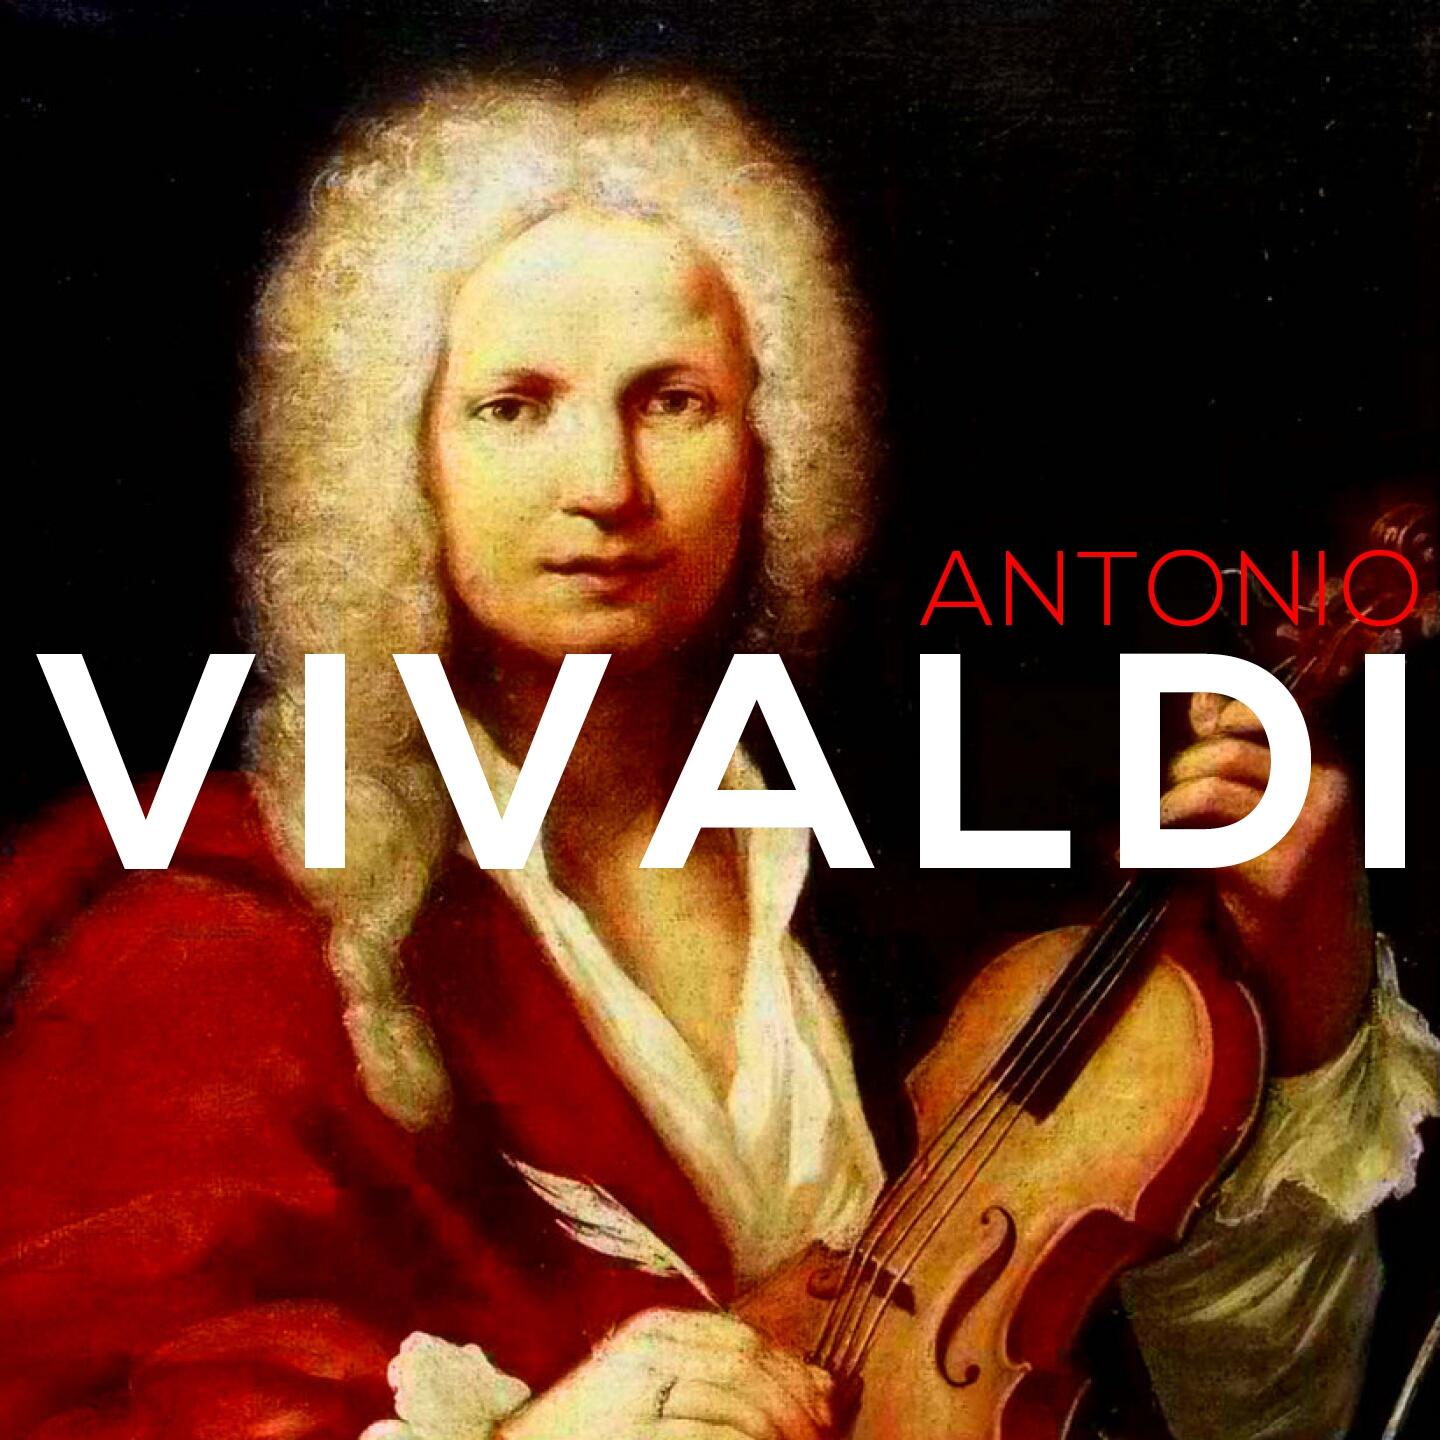 Жизнь антонио вивальди. Антонио Лучо Вивальди. Антонио Вивальди портрет. Вивальди портрет композитора. Композитор Антонио Вивальди.